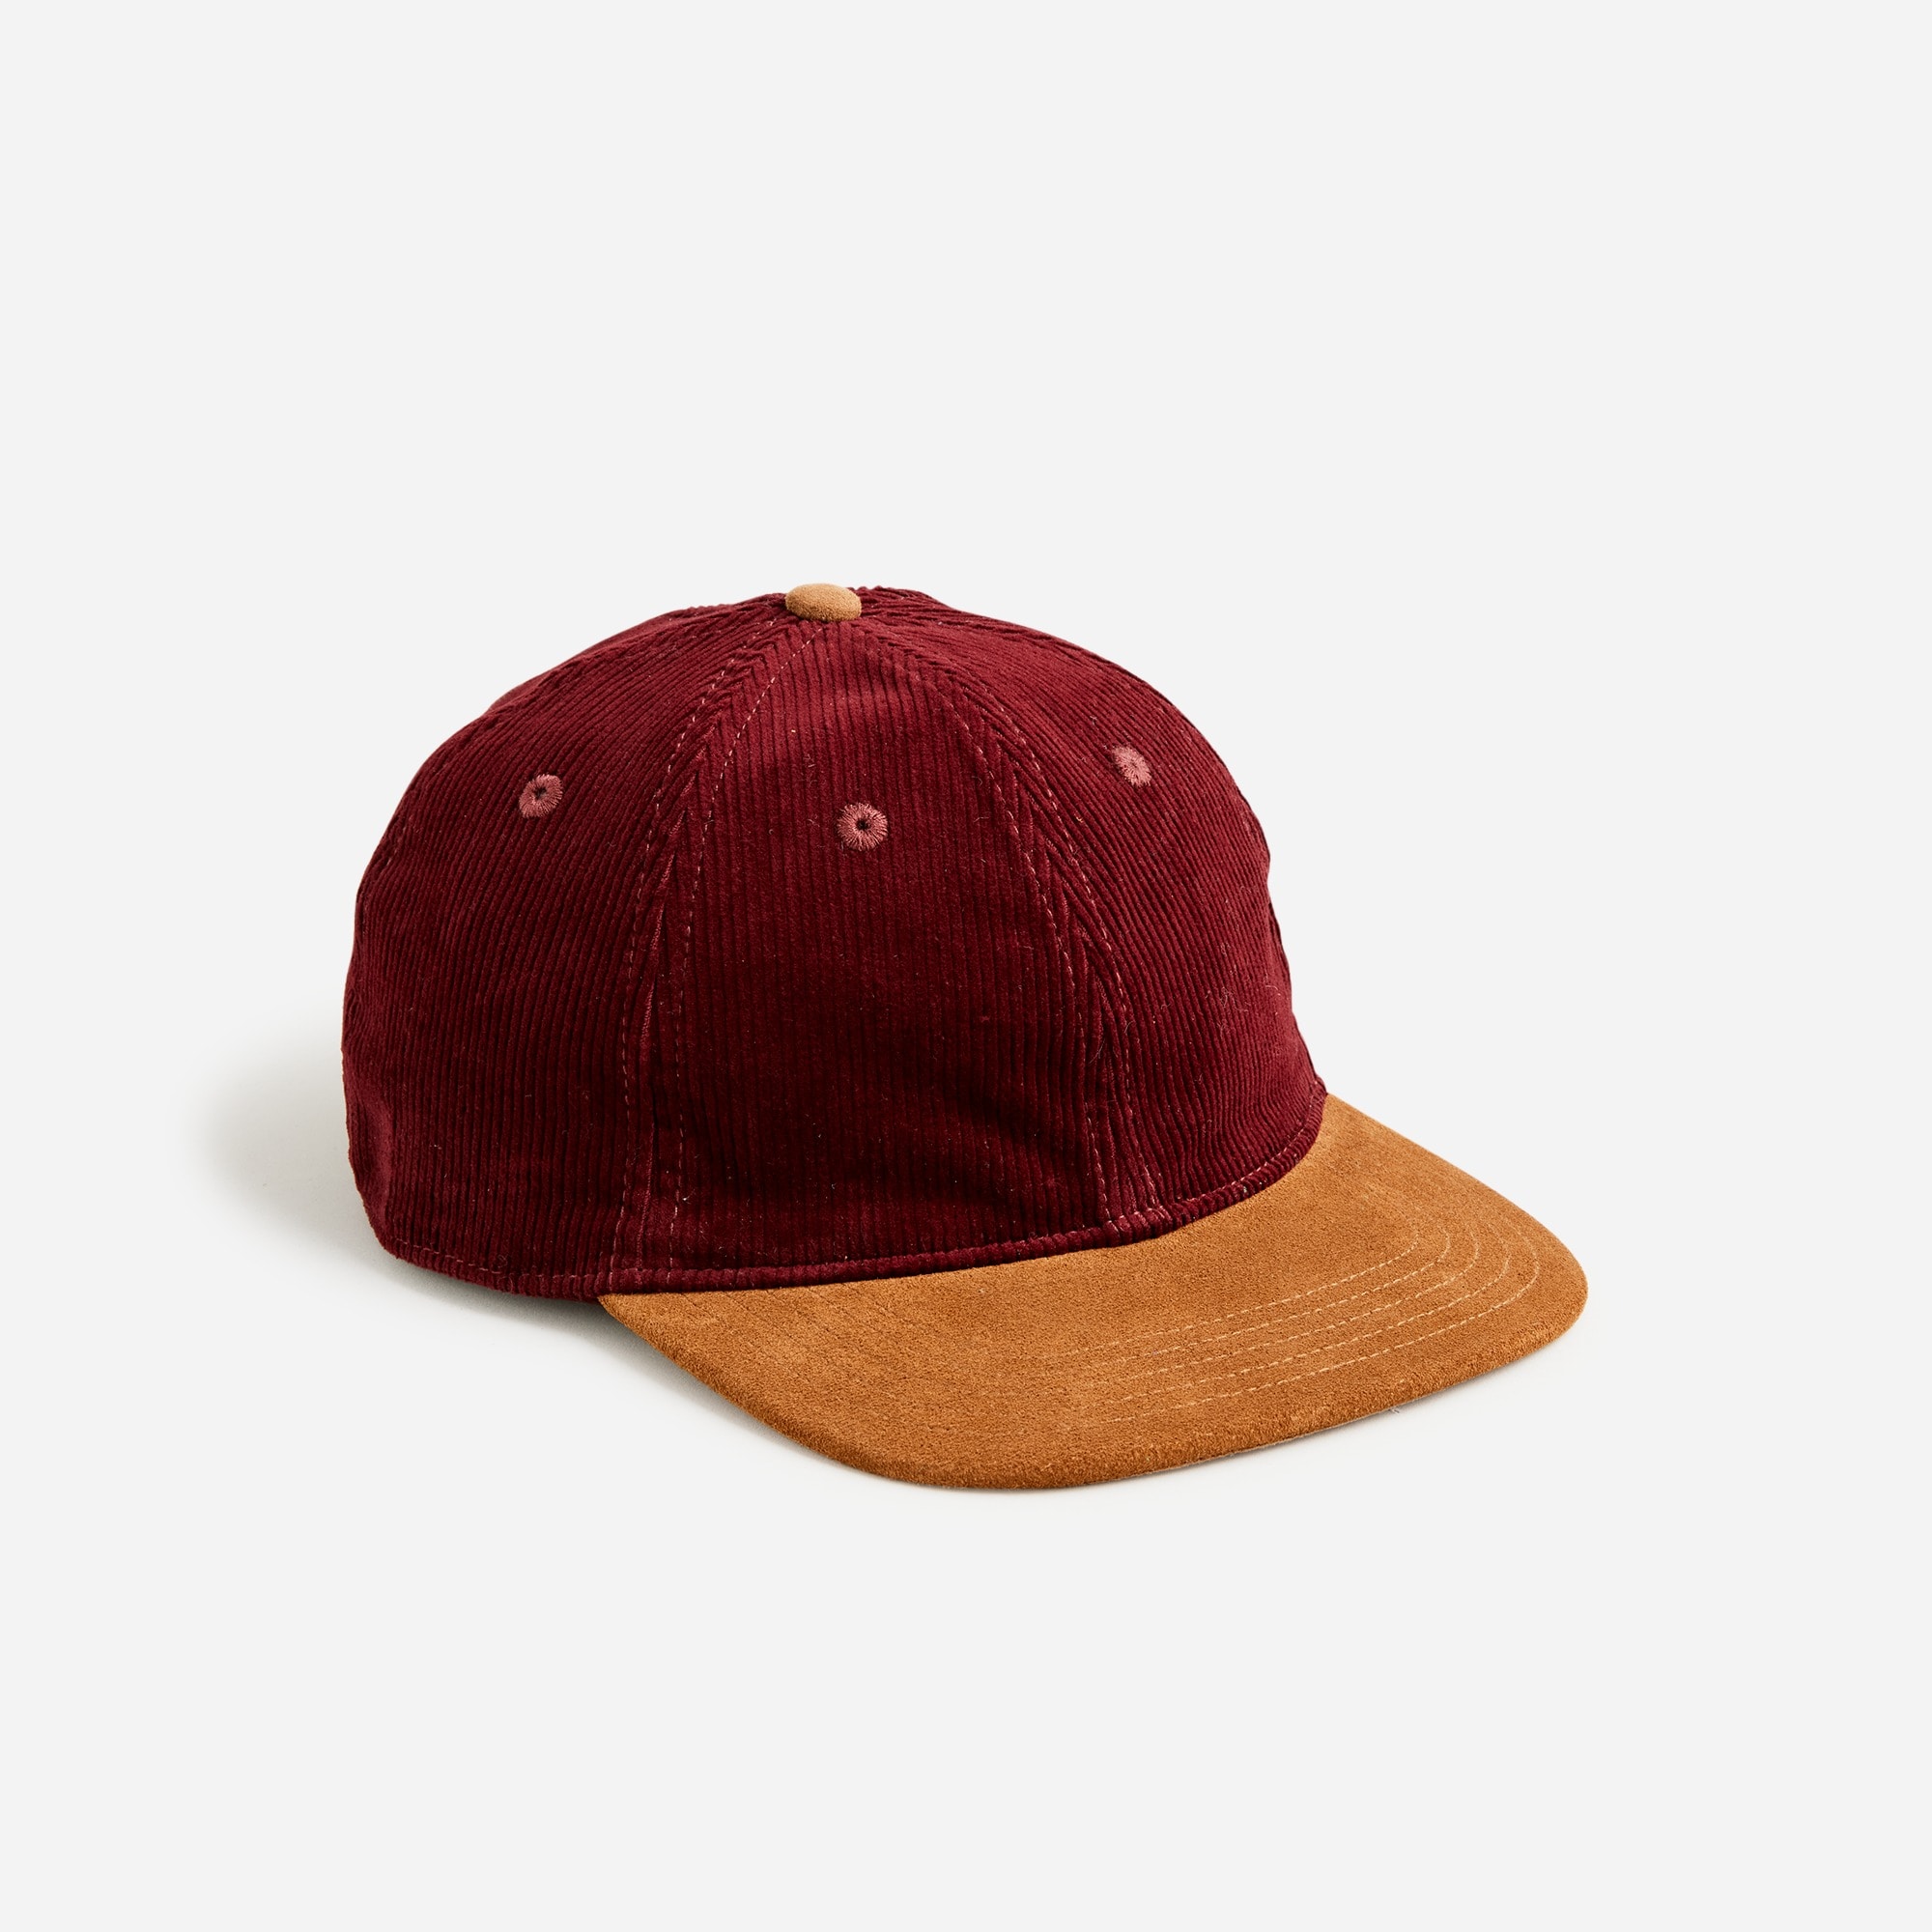  Corduroy baseball cap with suede brim